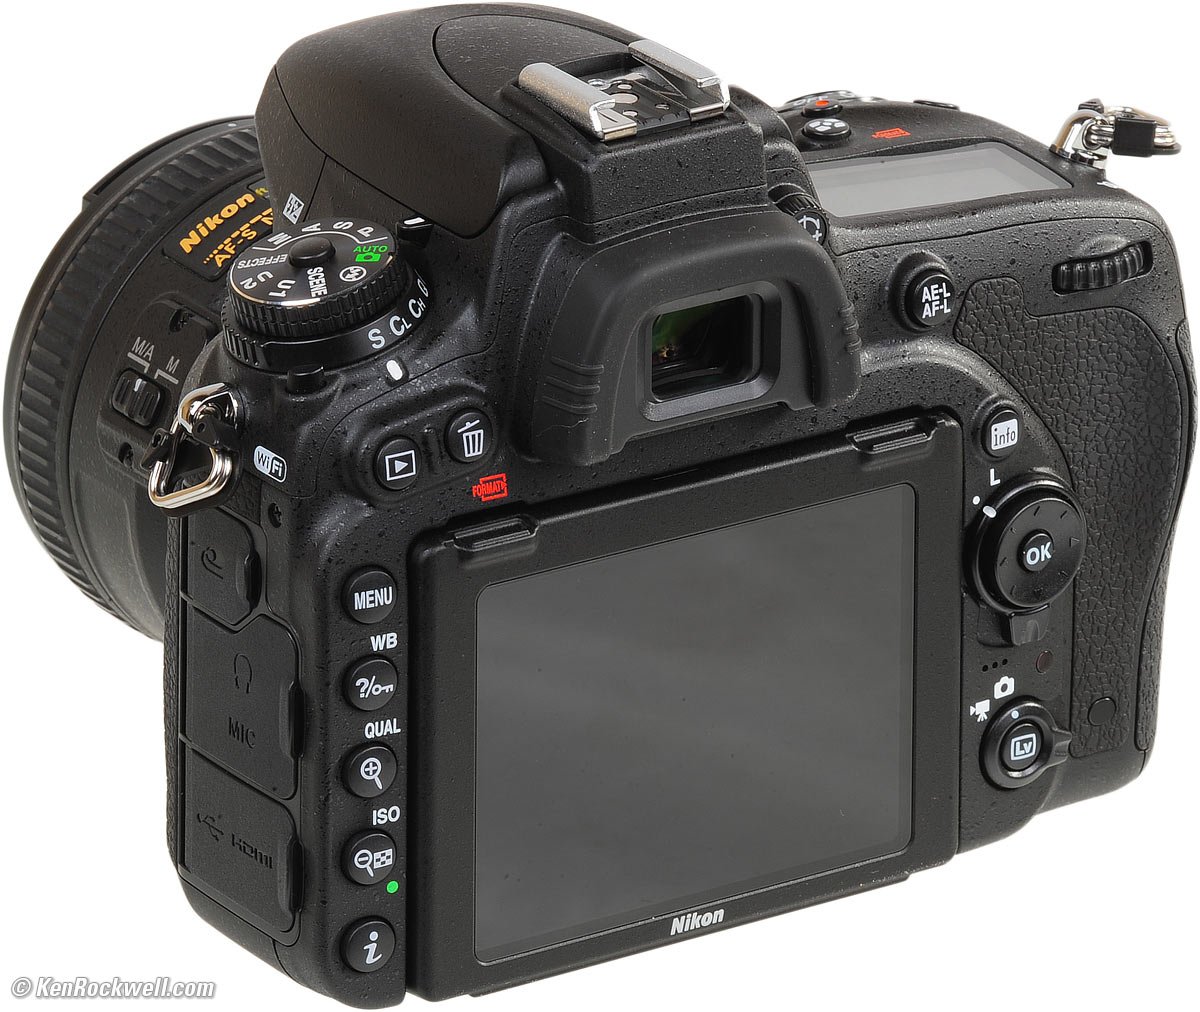 Nikon D750 Recommended Settings & Tips 